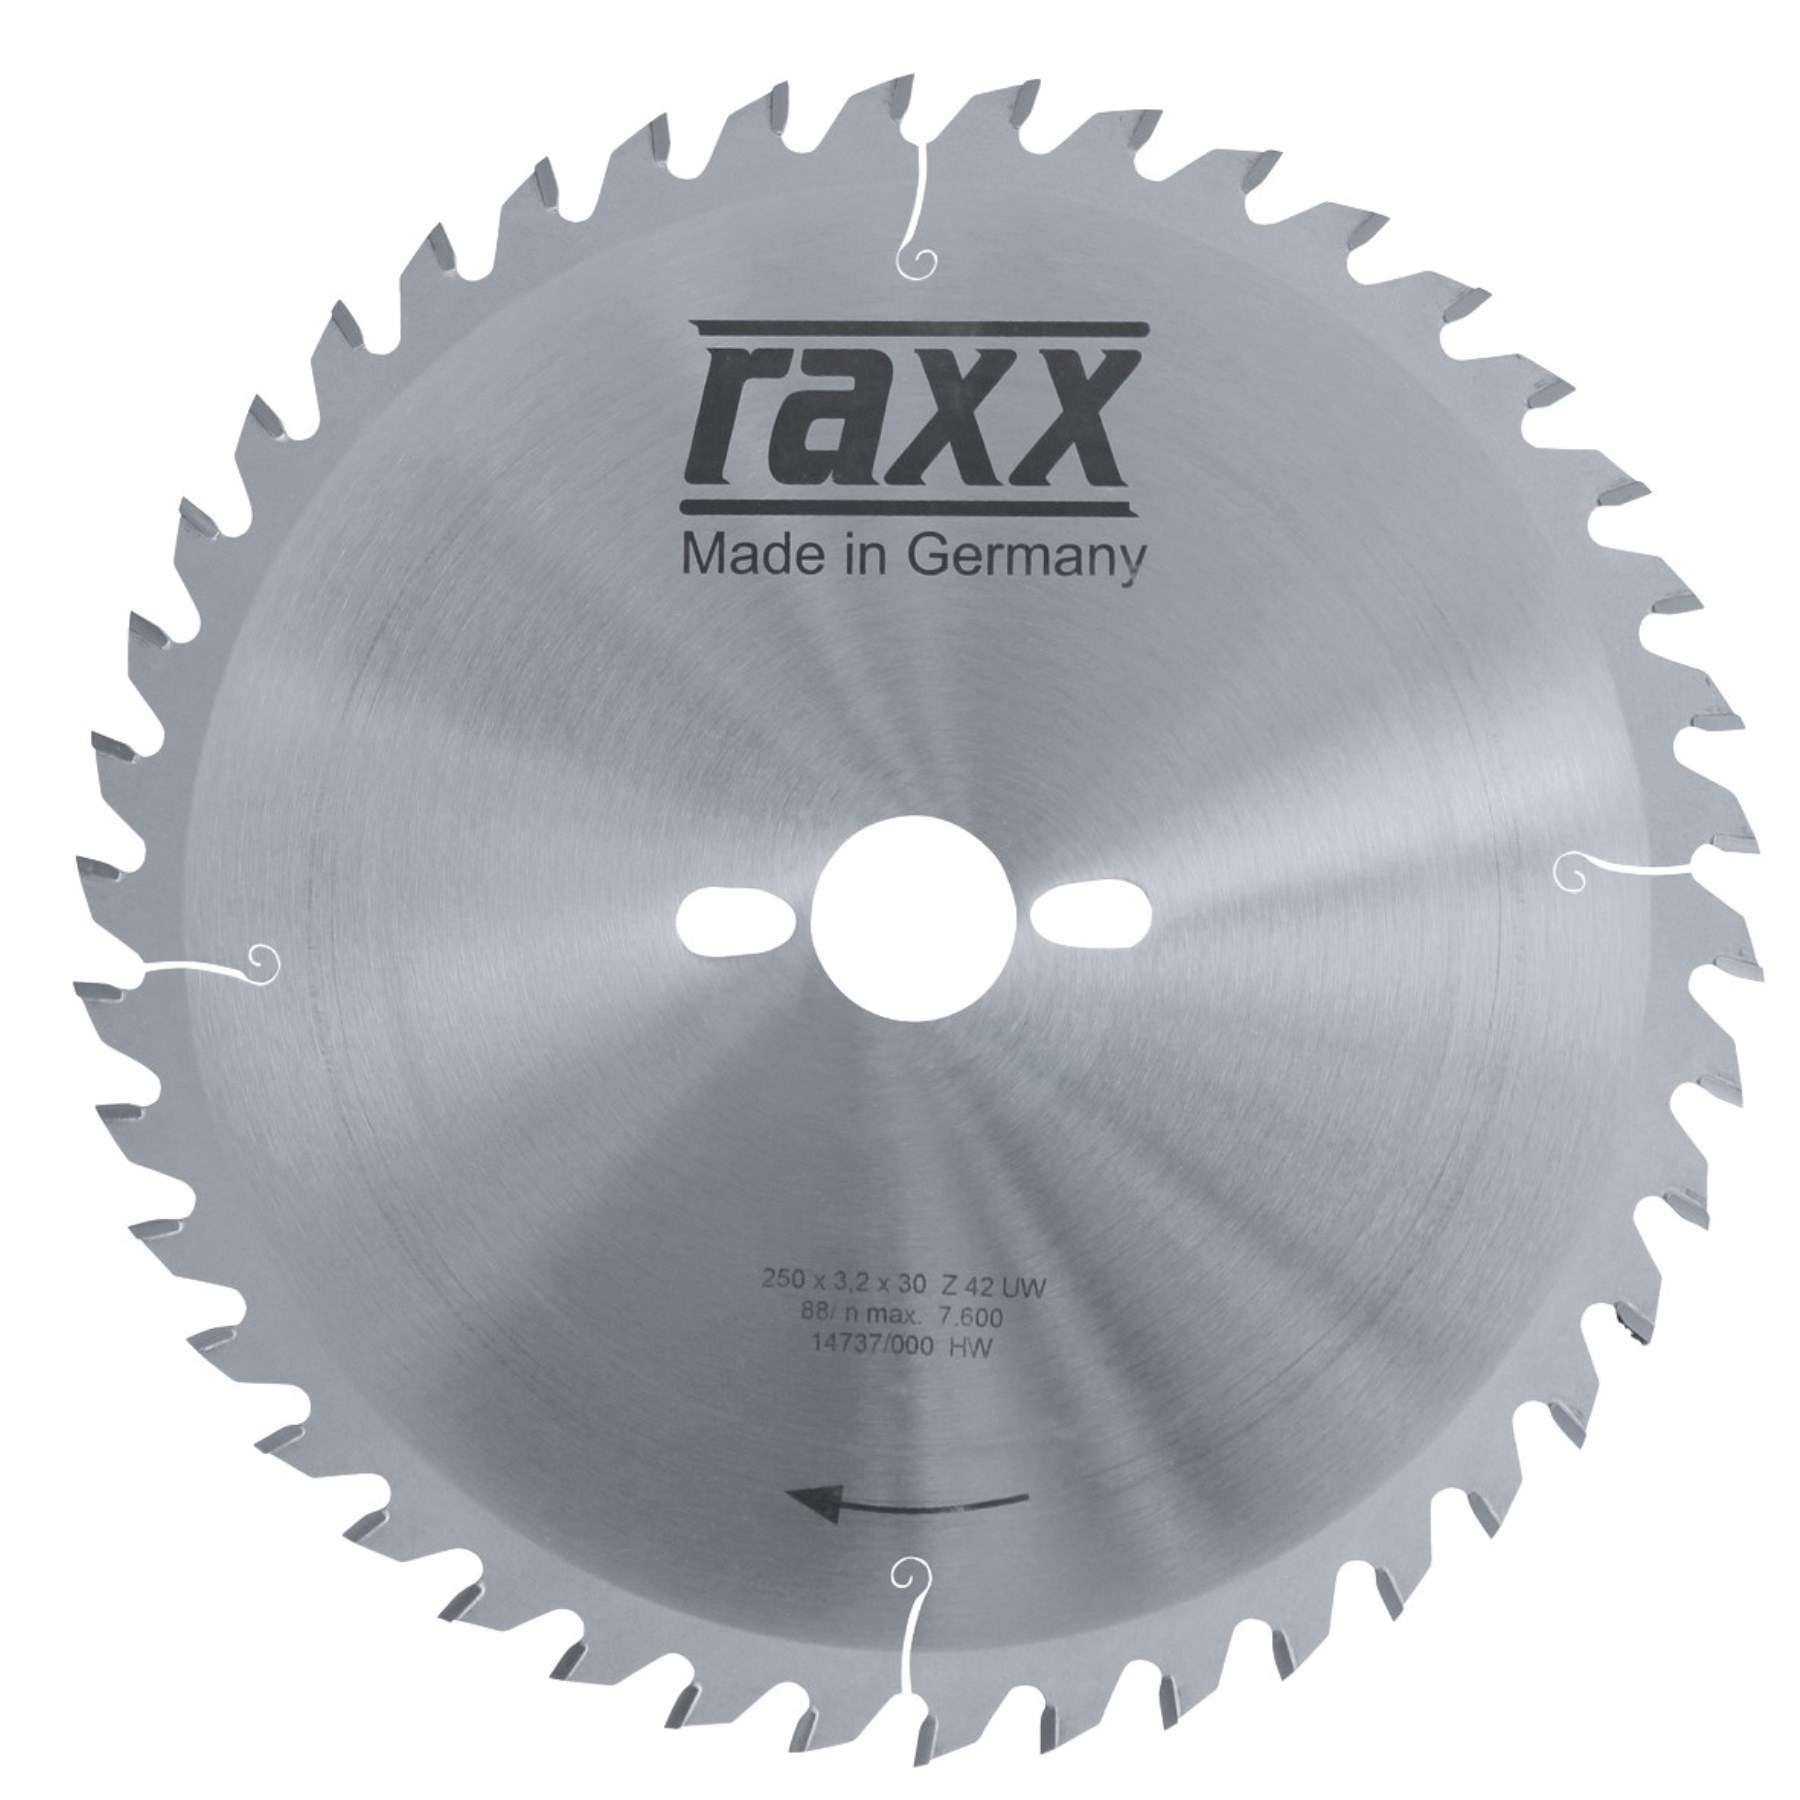 RAXX 1205065 kotouč k okružní pile HM 400x3,5x30 [ 53400300600060400 ]